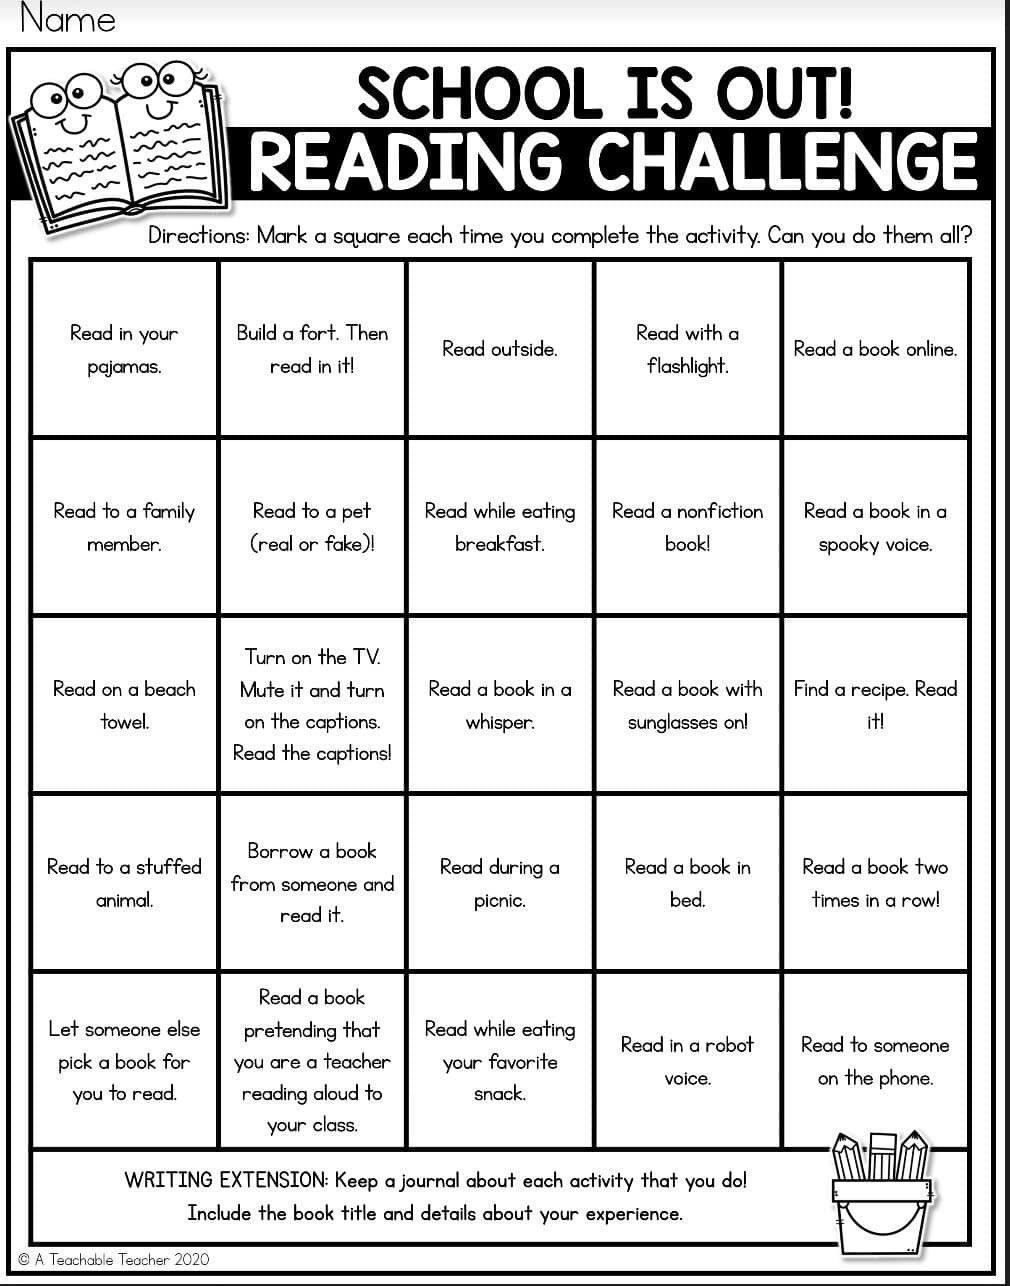 Summer Reading Bingo Challenge